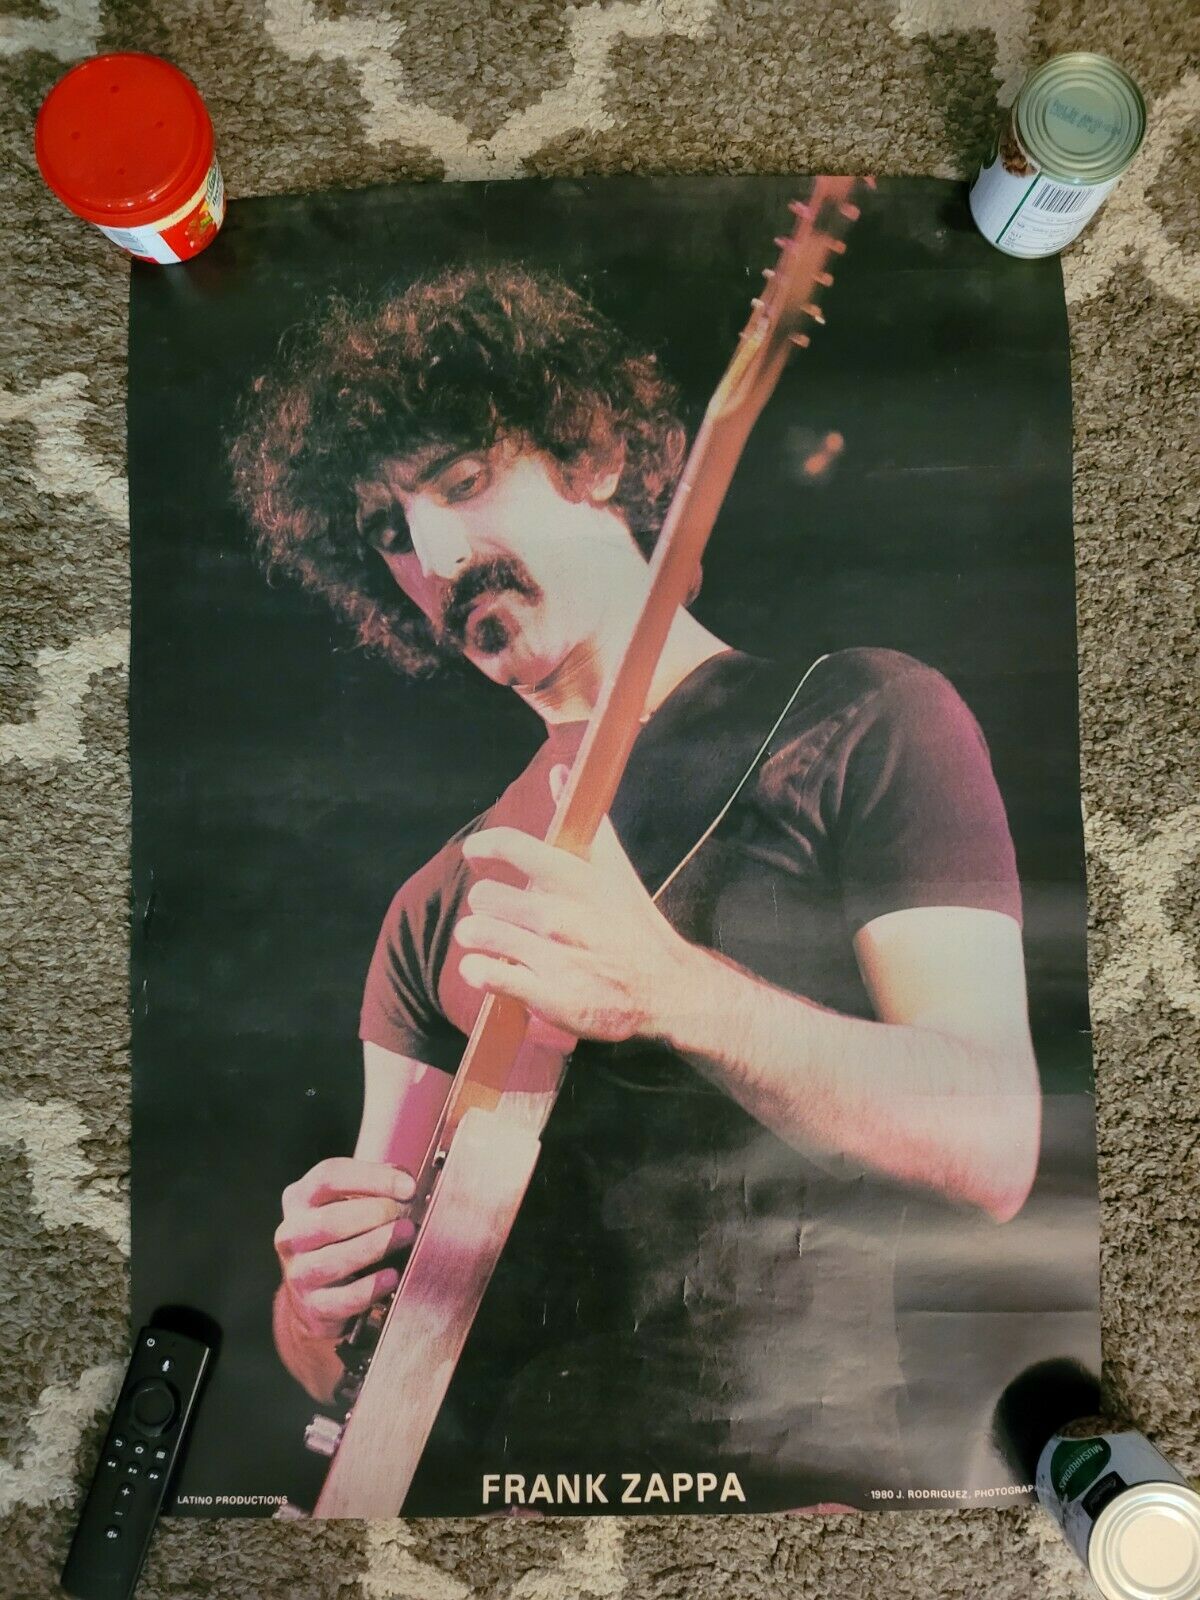 Frank Zappa Poster 20x28 Latino Productions 1980